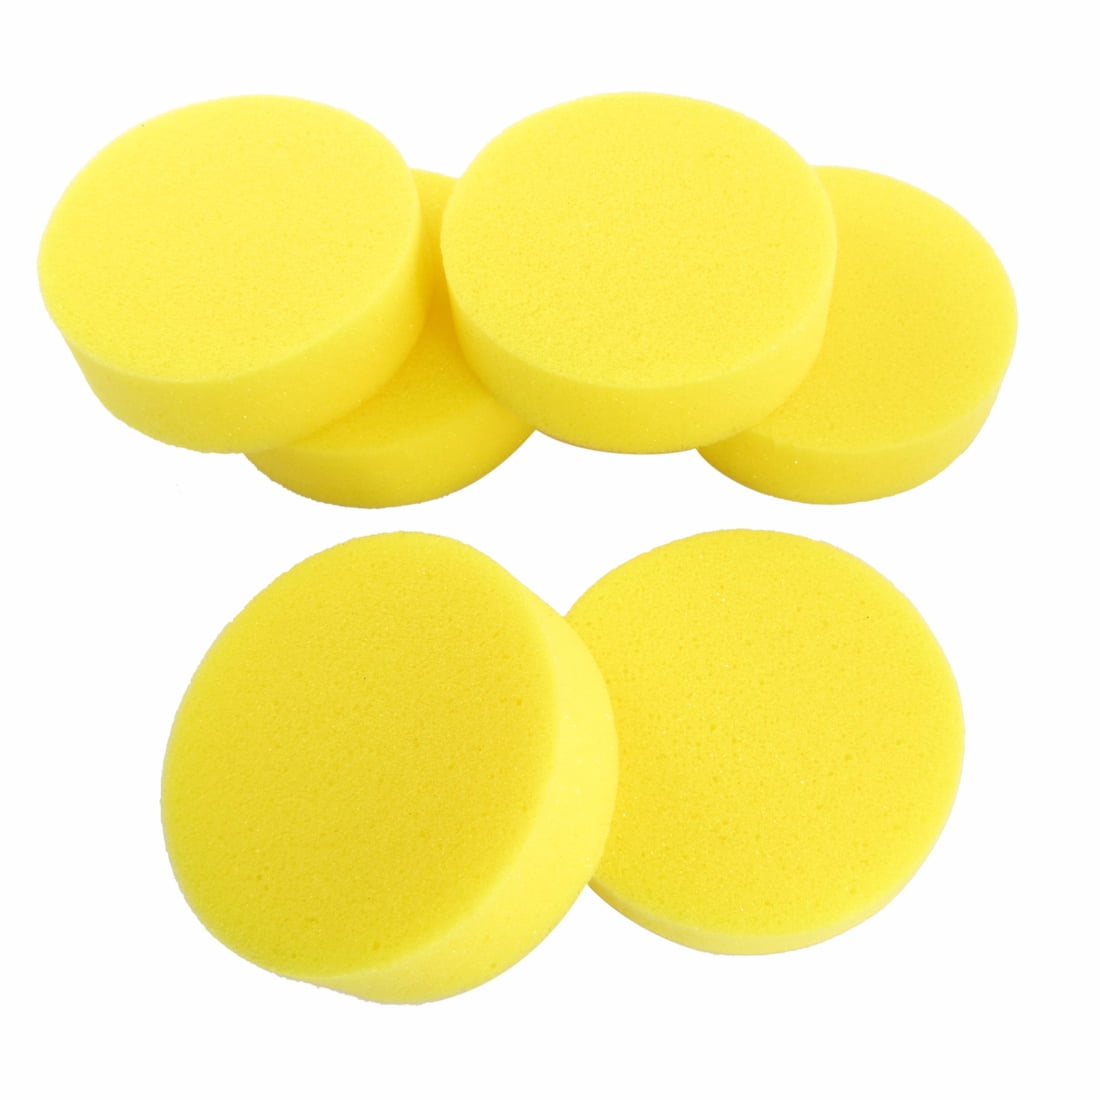 4.25 Inch Diameter 6 Pack Soft Car Wax Detailing Sponge Yellow VIKING Foam Applicator and Cleaning Pads 